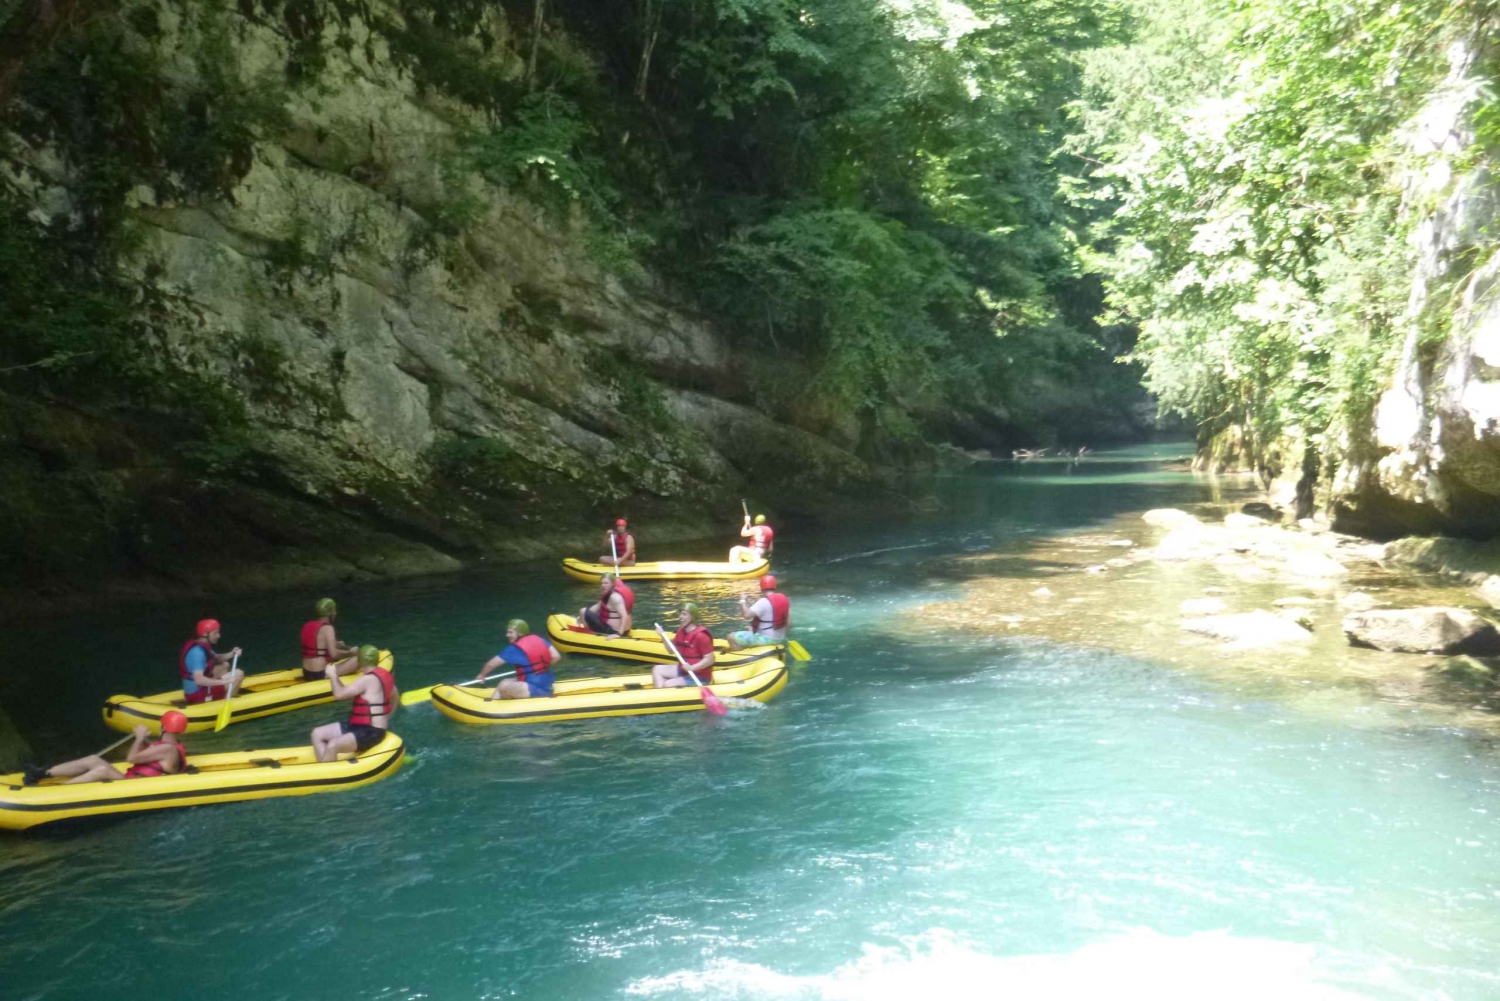 Slunj: Kayaking on the Upper River Mreznica